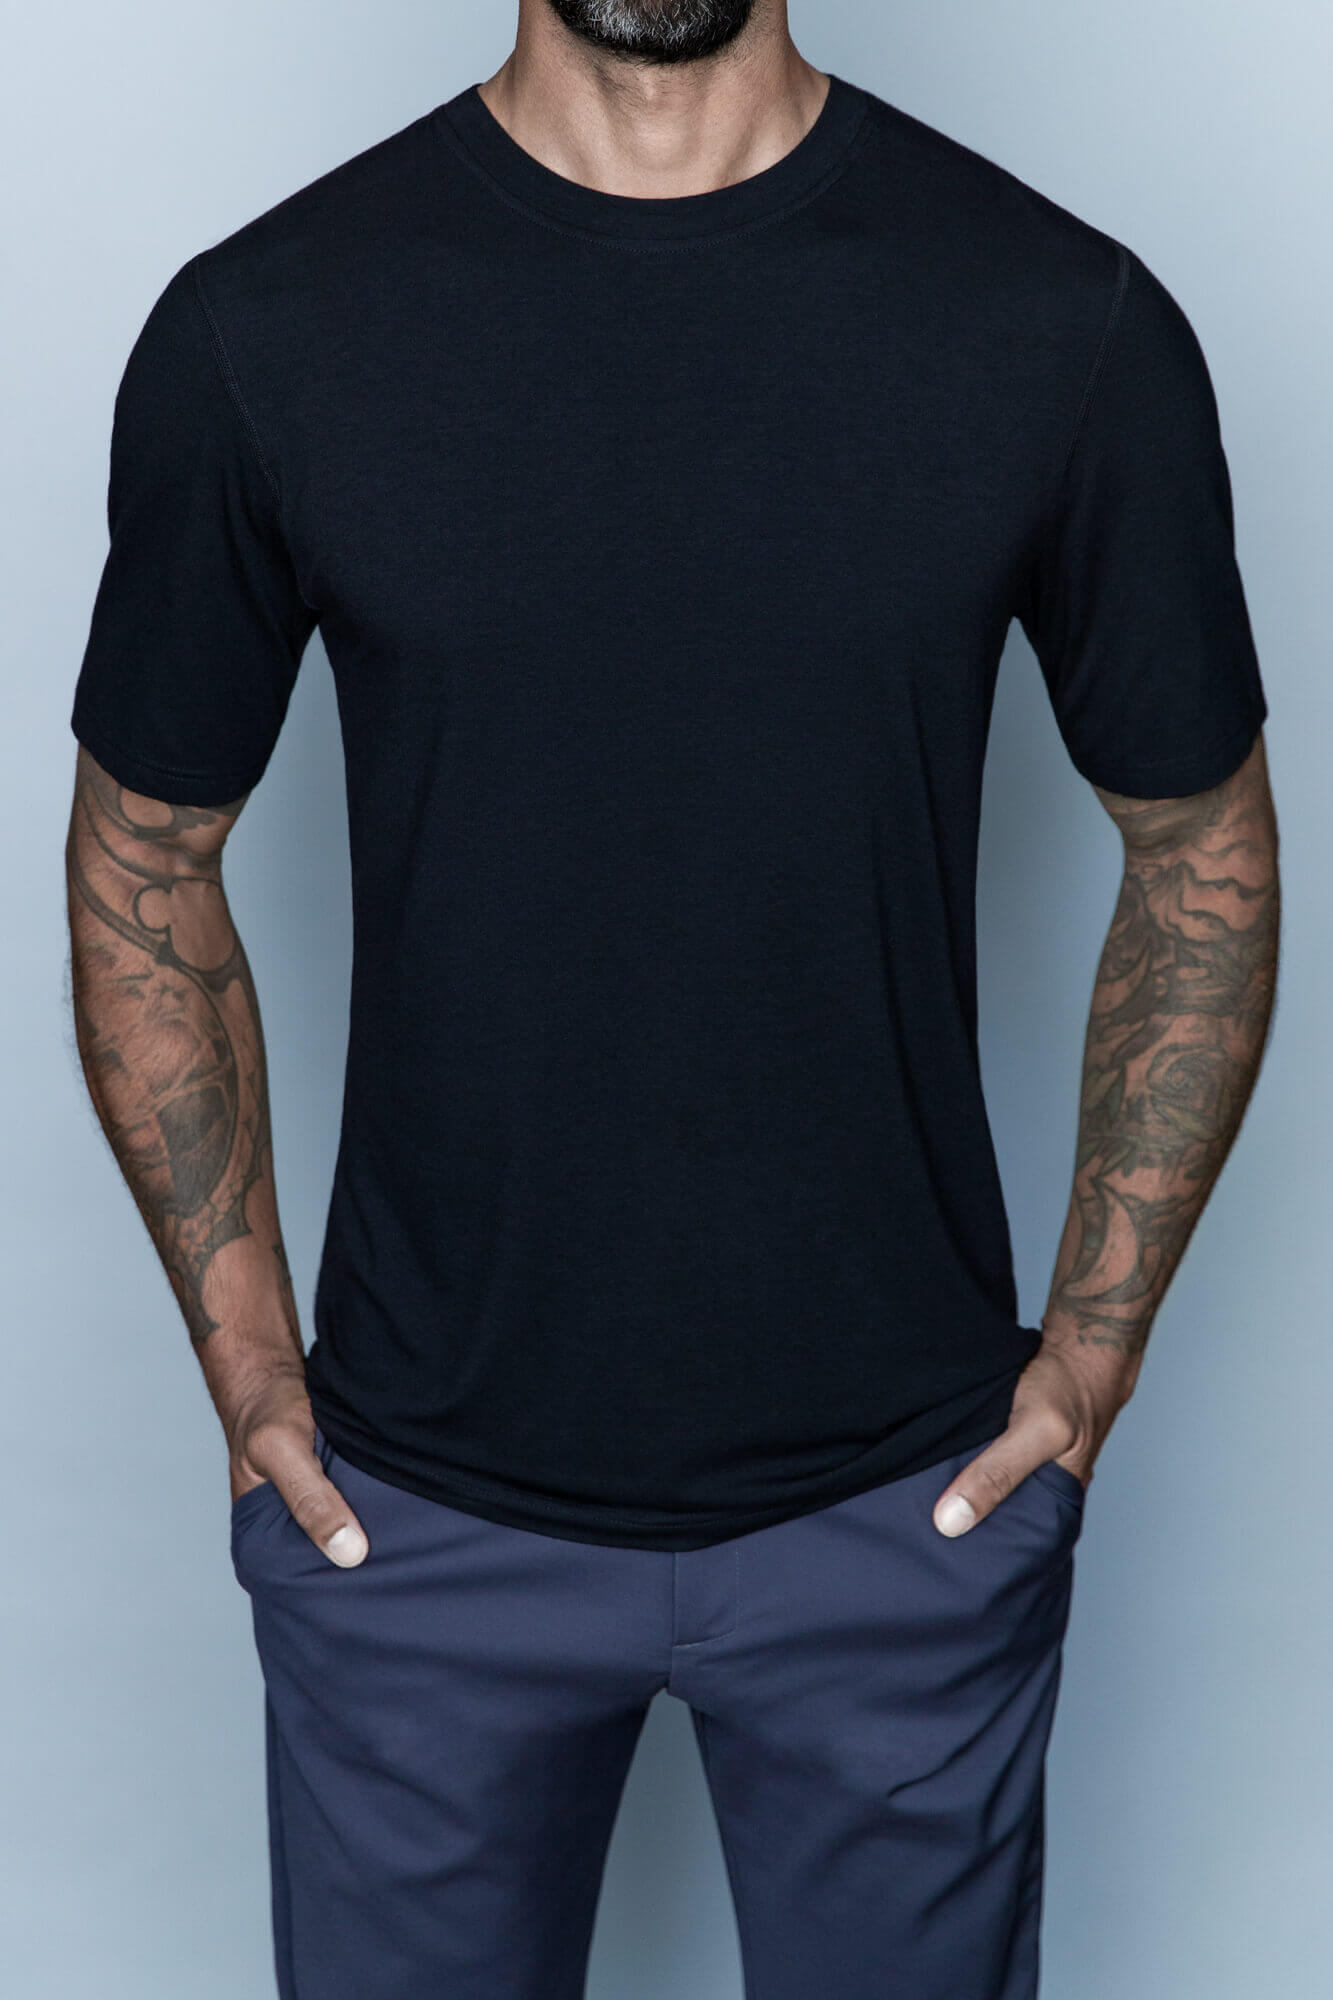 Men's Bamboo T-Shirt | American Cotton T-Shirt S / Black